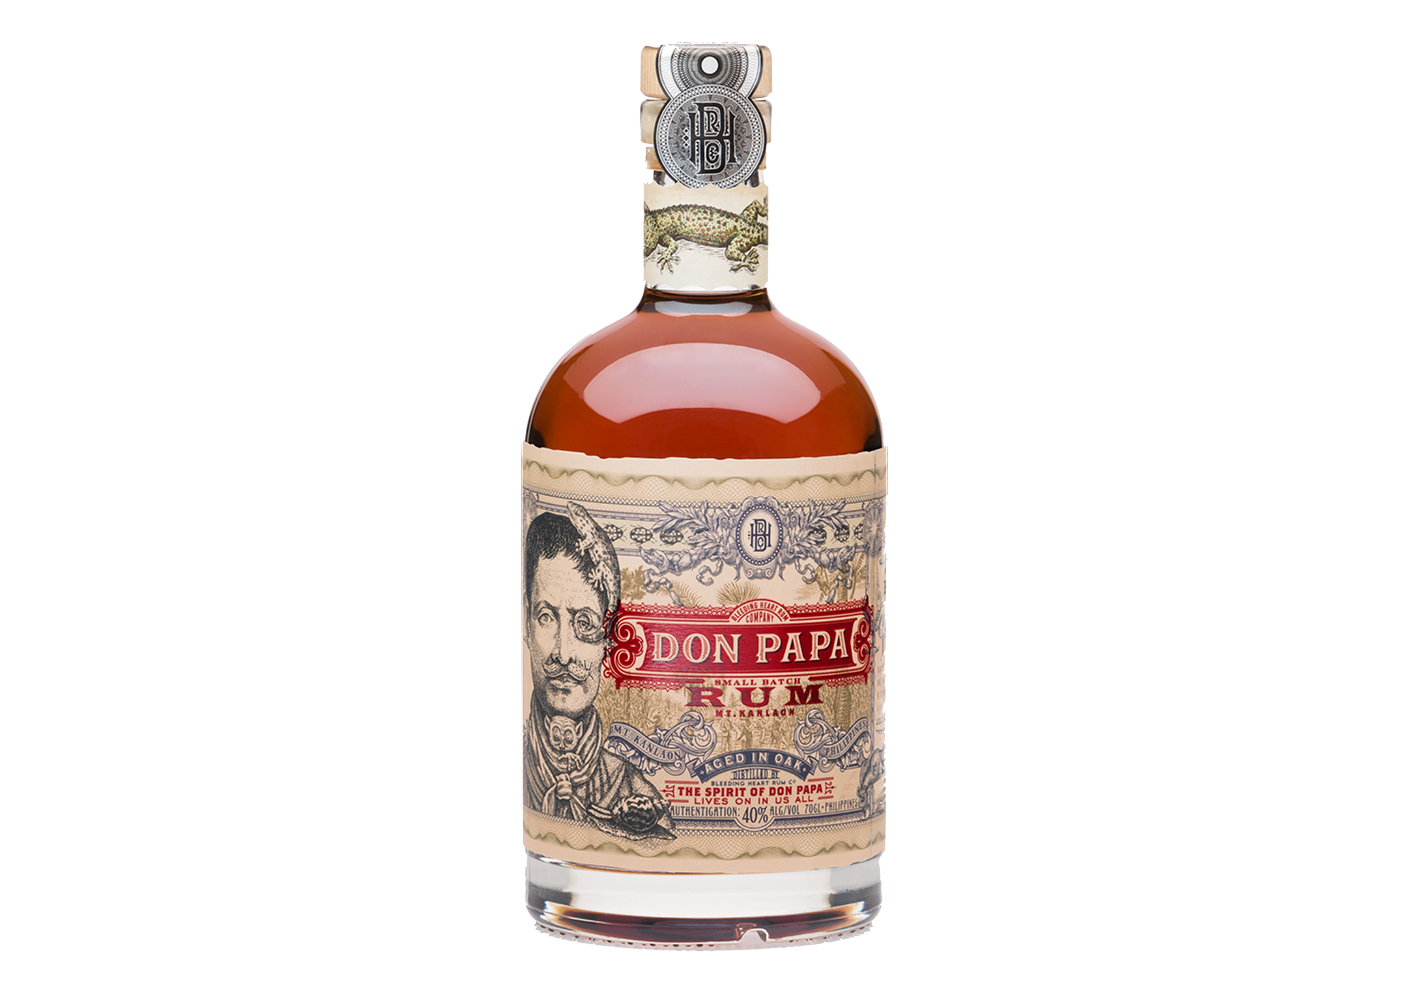 Don Papa small batch rum, £31.95